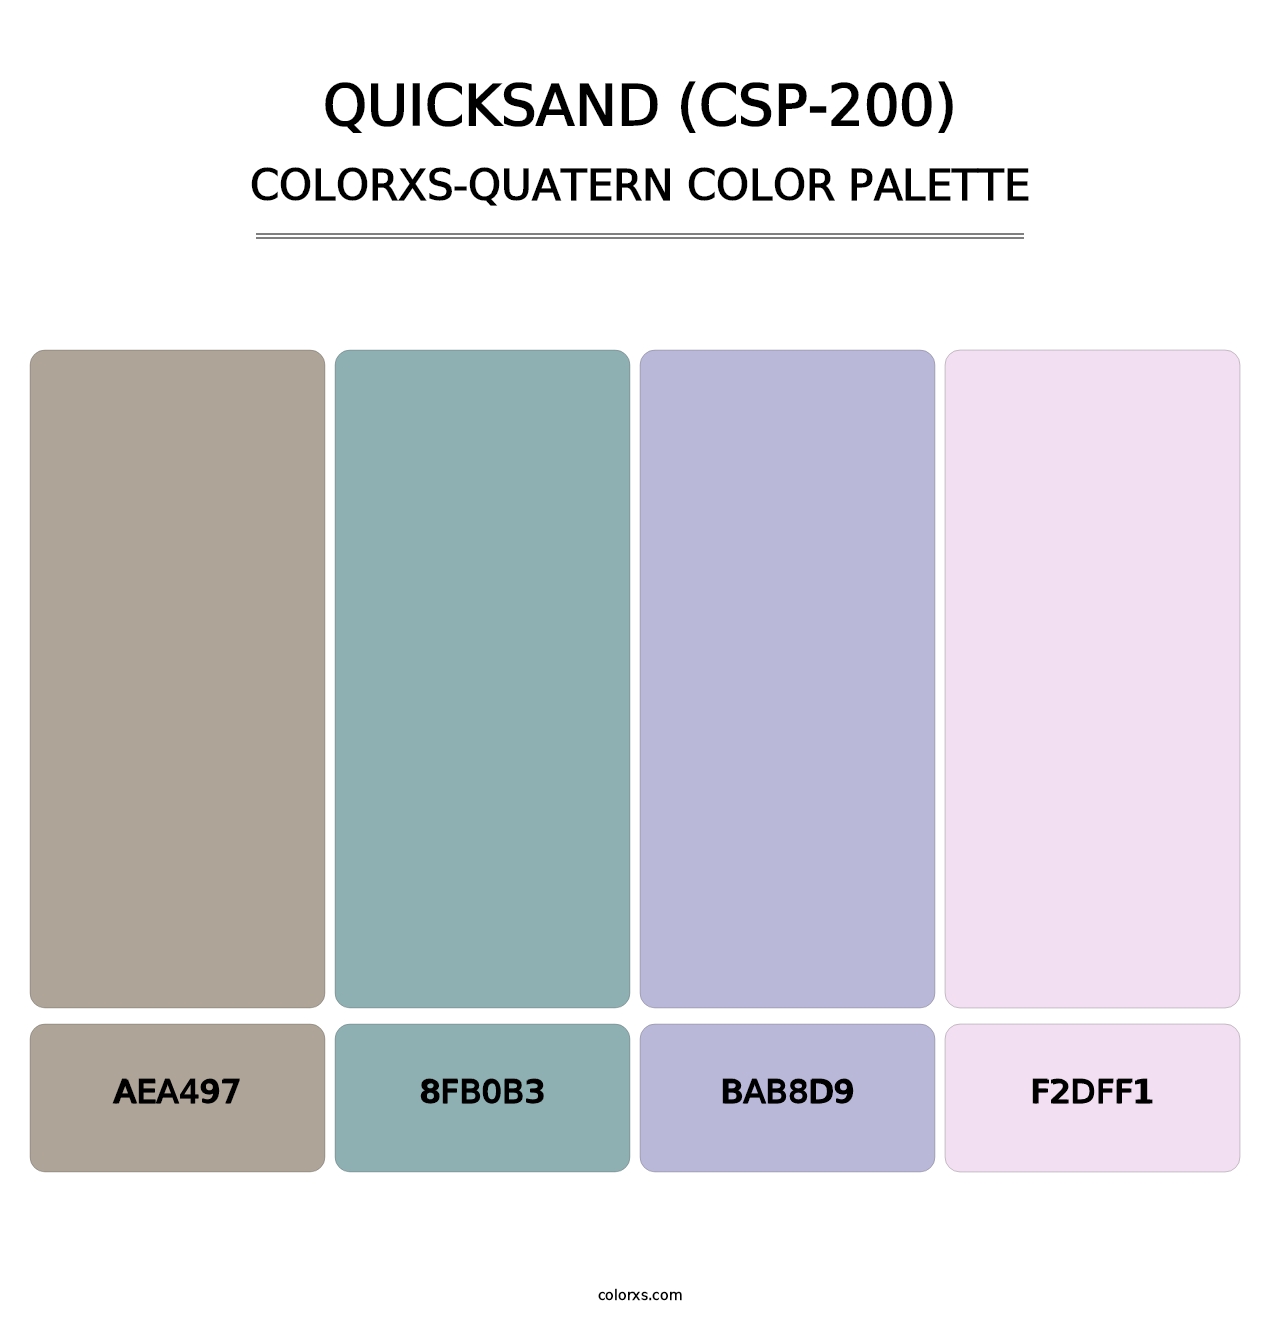 Quicksand (CSP-200) - Colorxs Quatern Palette